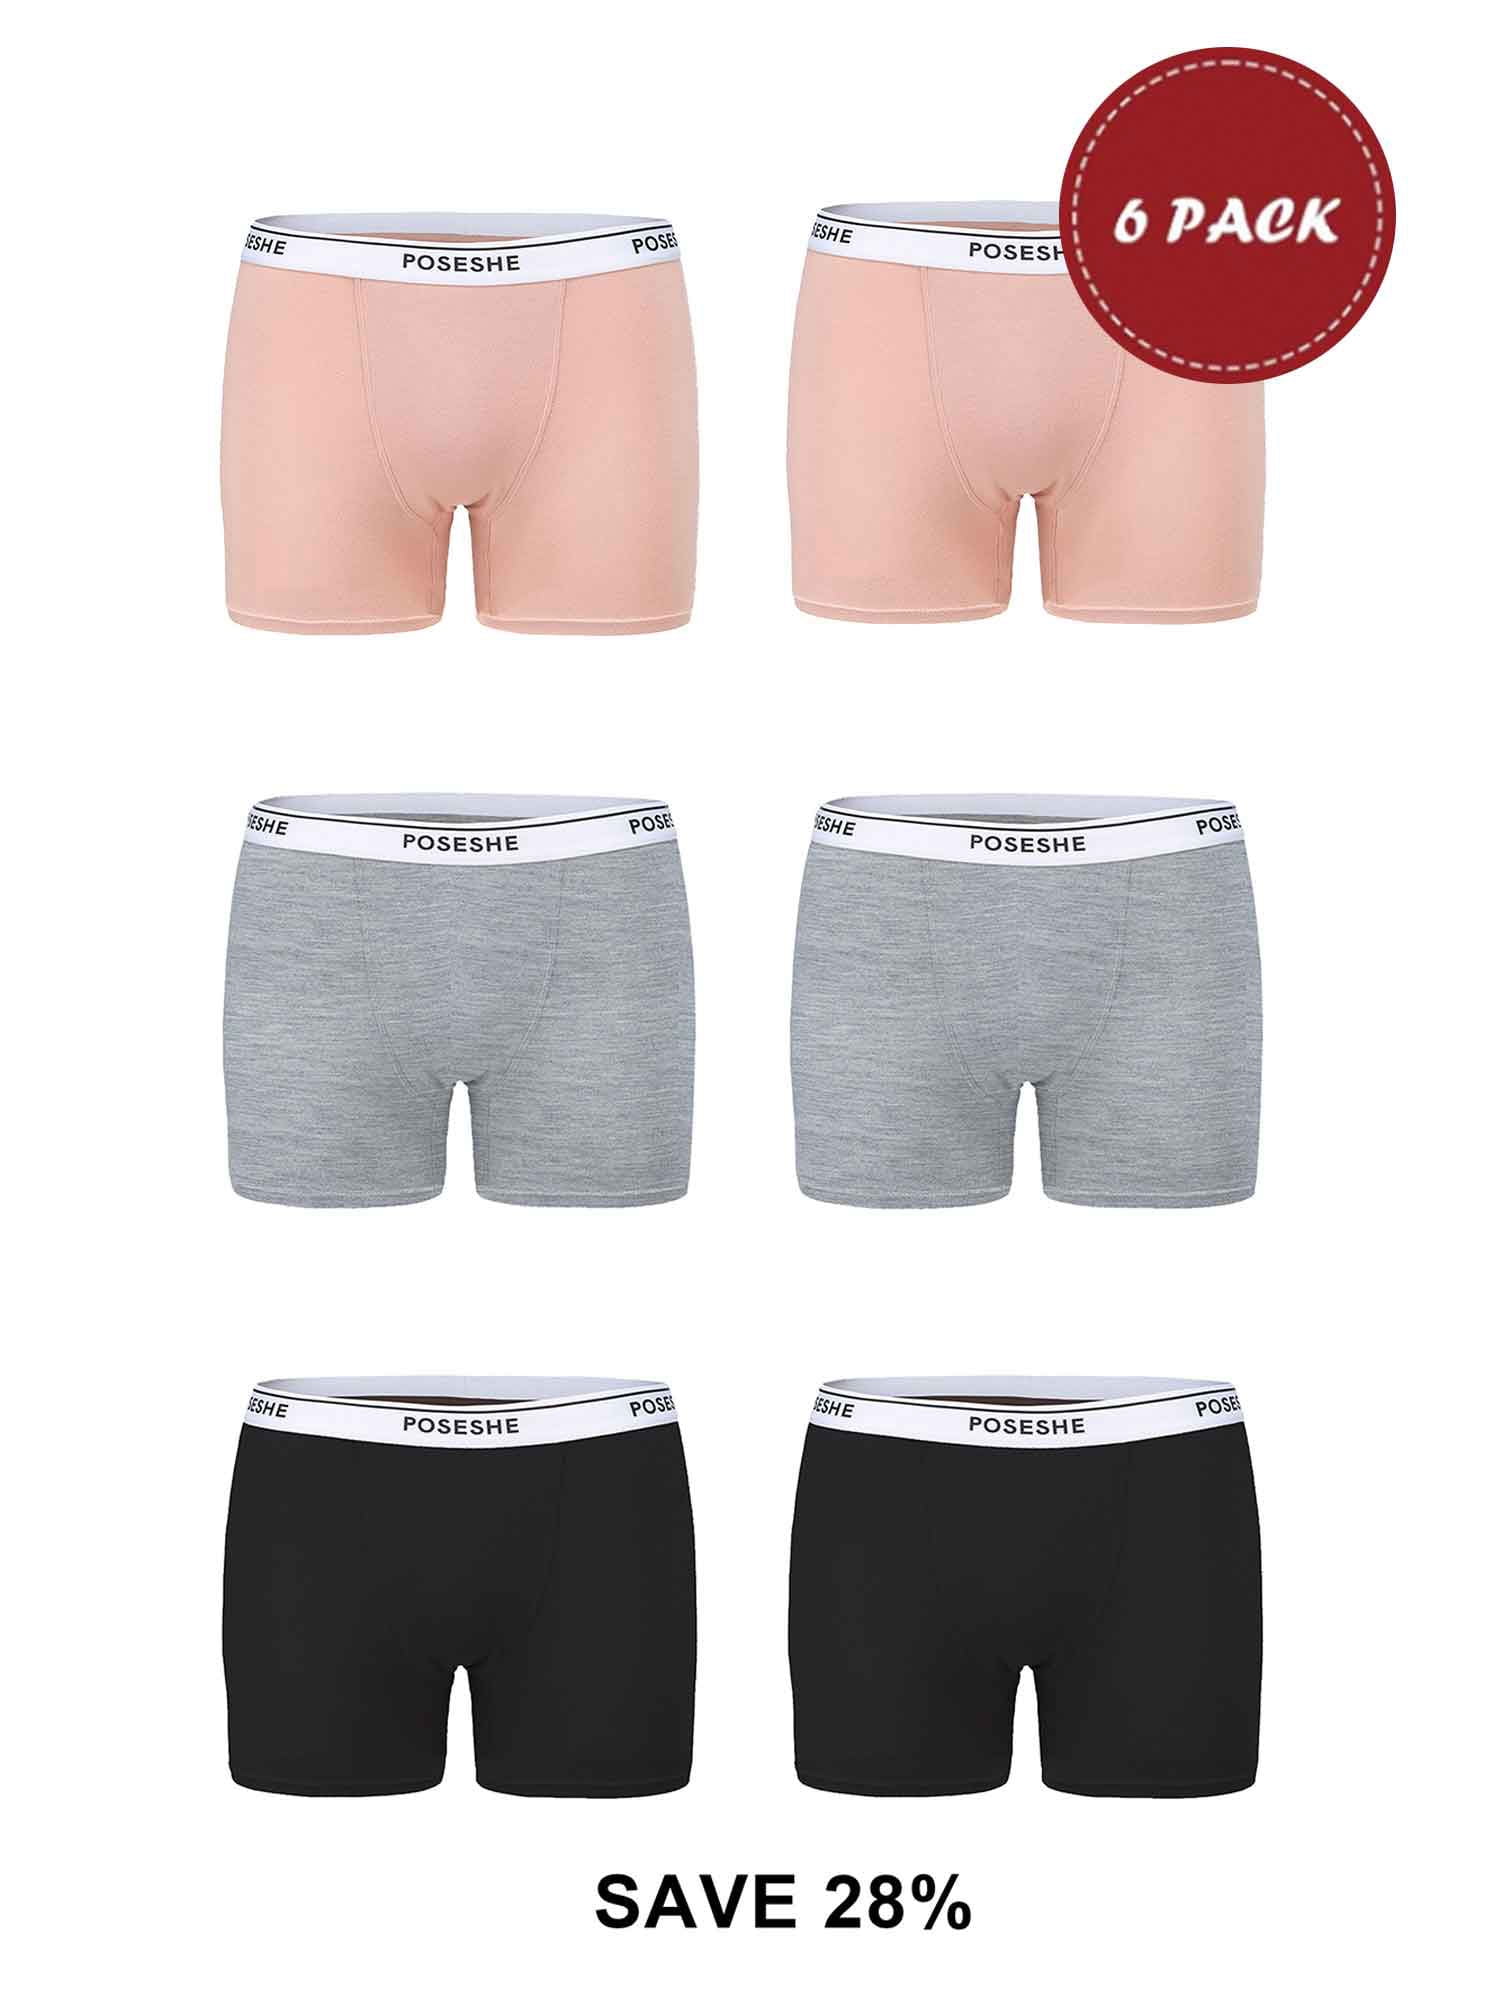 POSESHE Women's Boxer Underwear, Plus Size Boyshorts Panties 6/8